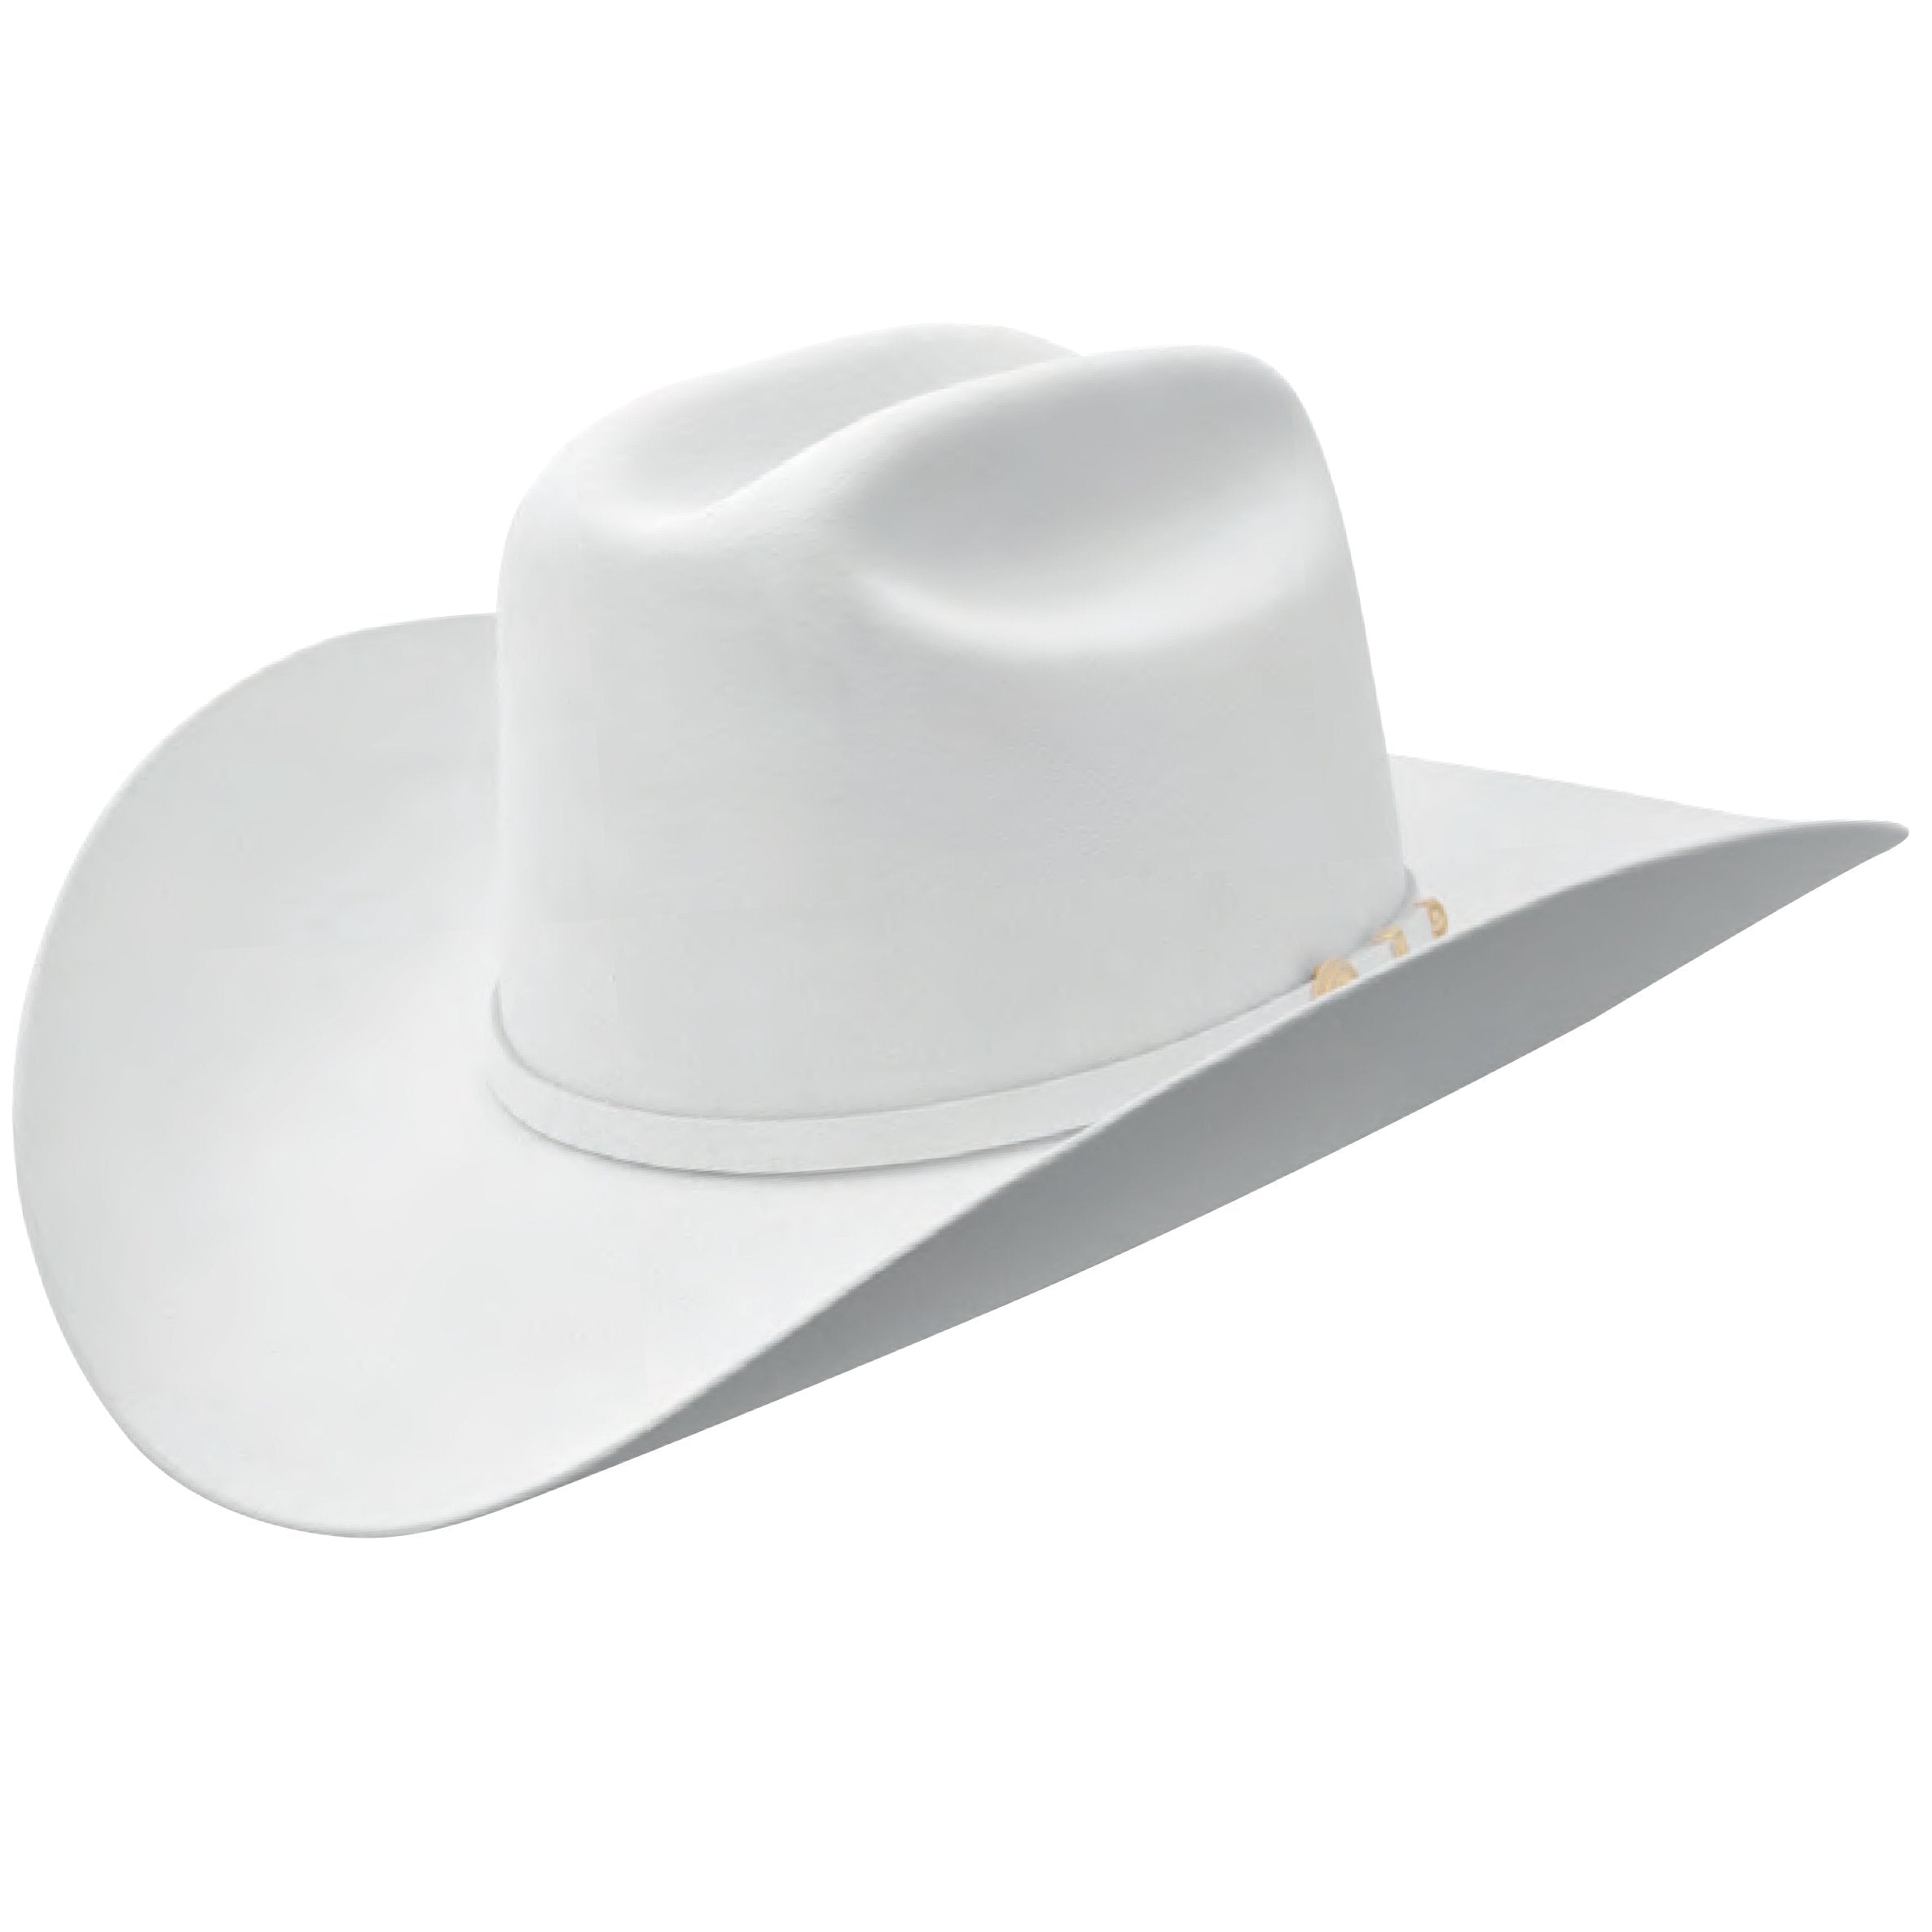 El Presidente White 100x Felt Hat